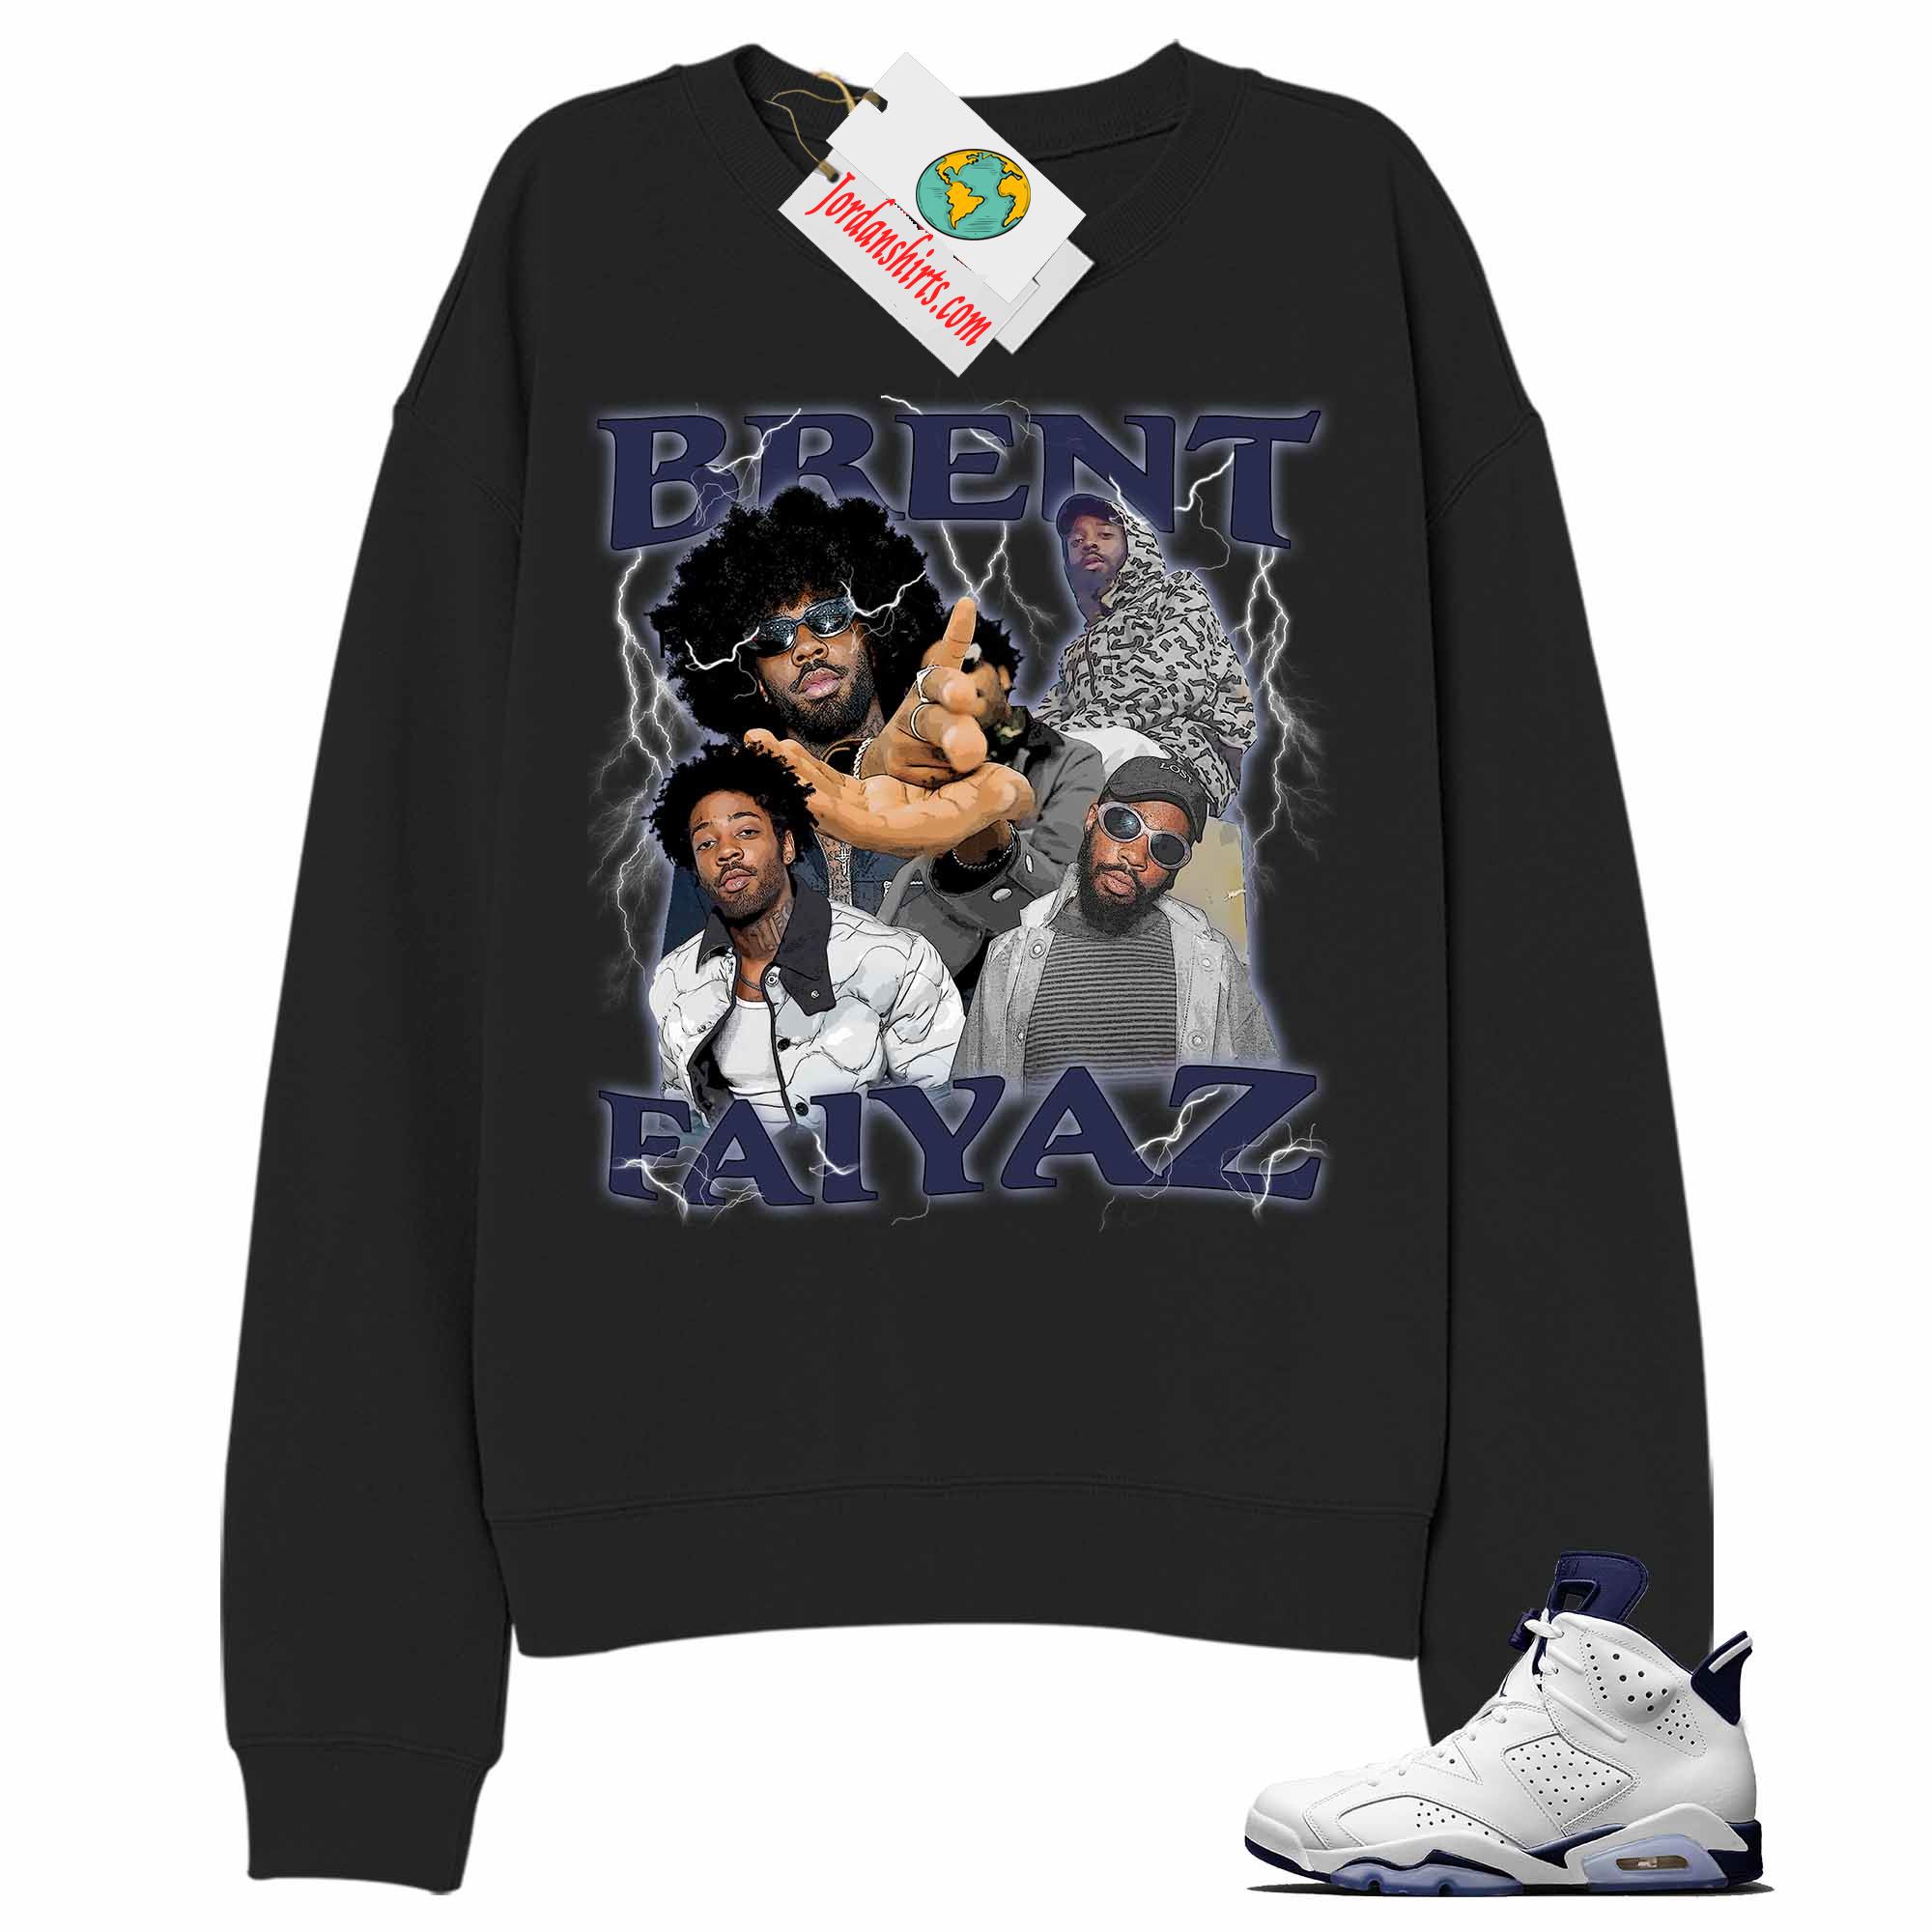 Jordan 6 Sweatshirt, Brent Faiyaz Retro Vintage 90s Hip Hop Raptees Black Sweatshirt Air Jordan 6 Midnight Navy 6s Full Size Up To 5xl